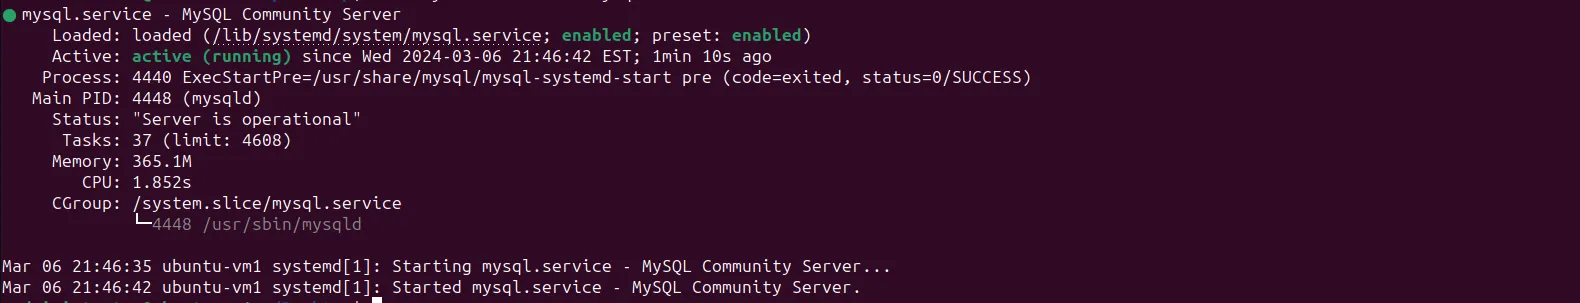 MySQL service status